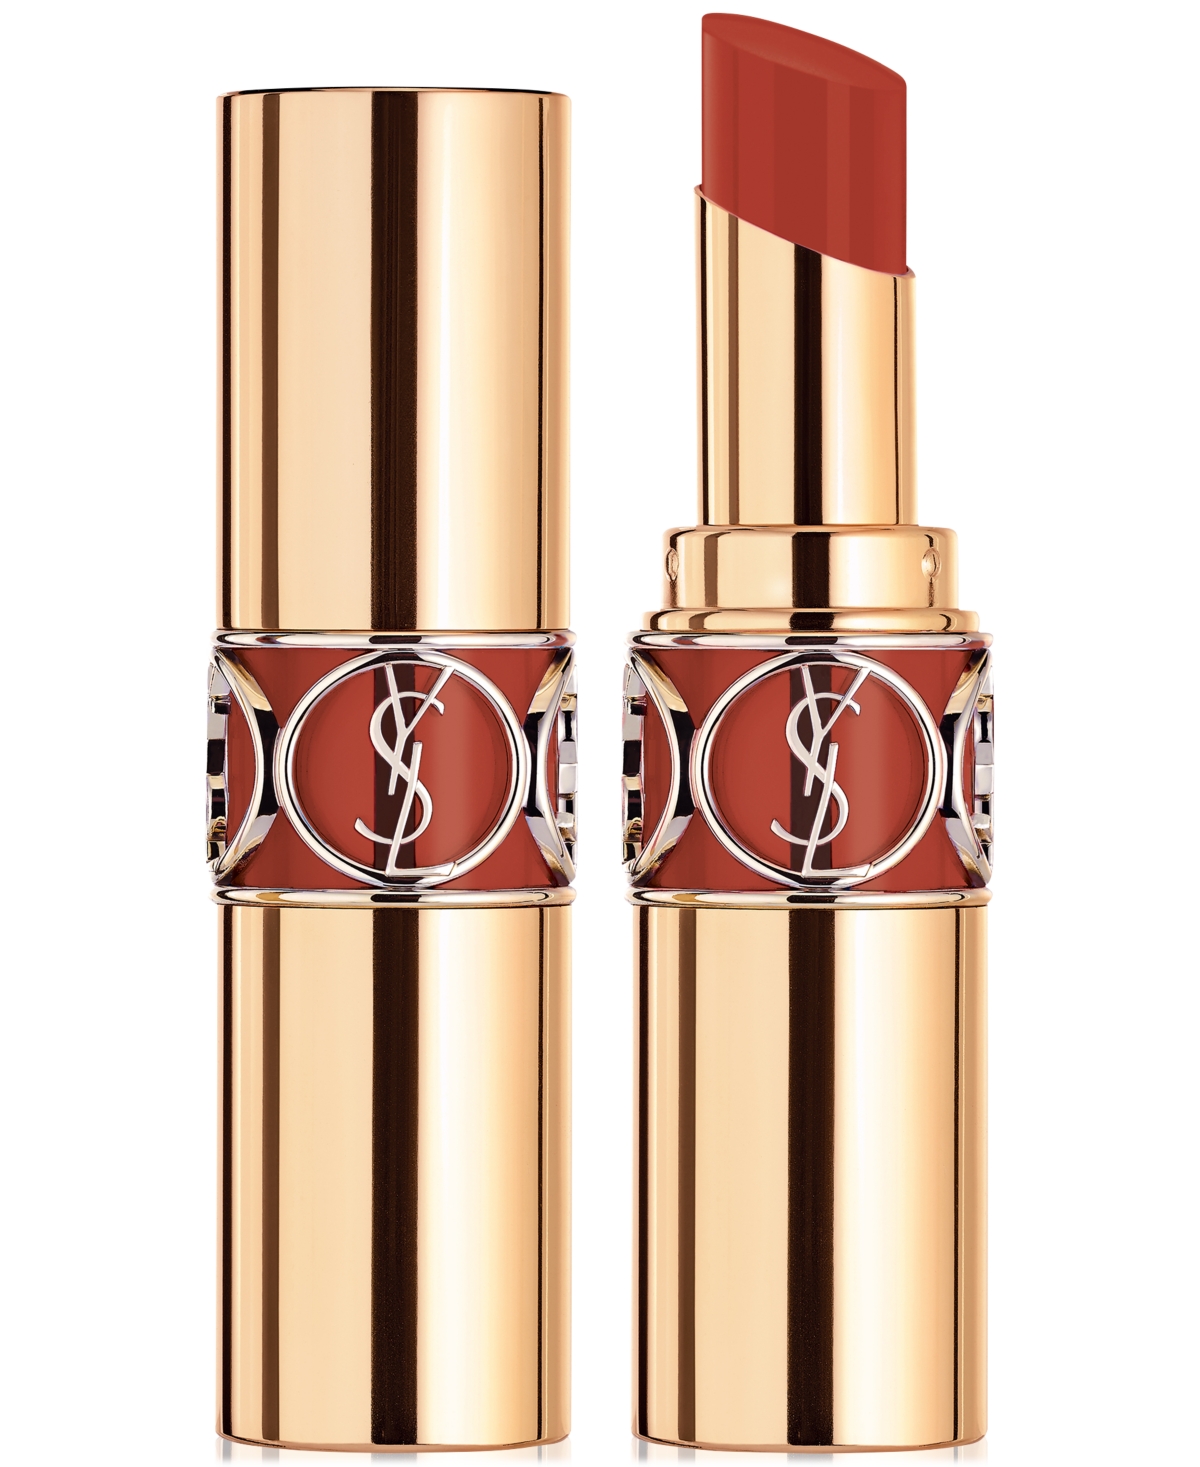 Yves Saint Laurent Rouge Volupte Shine Oil-In-Stick Hydrating Lipstick Balm